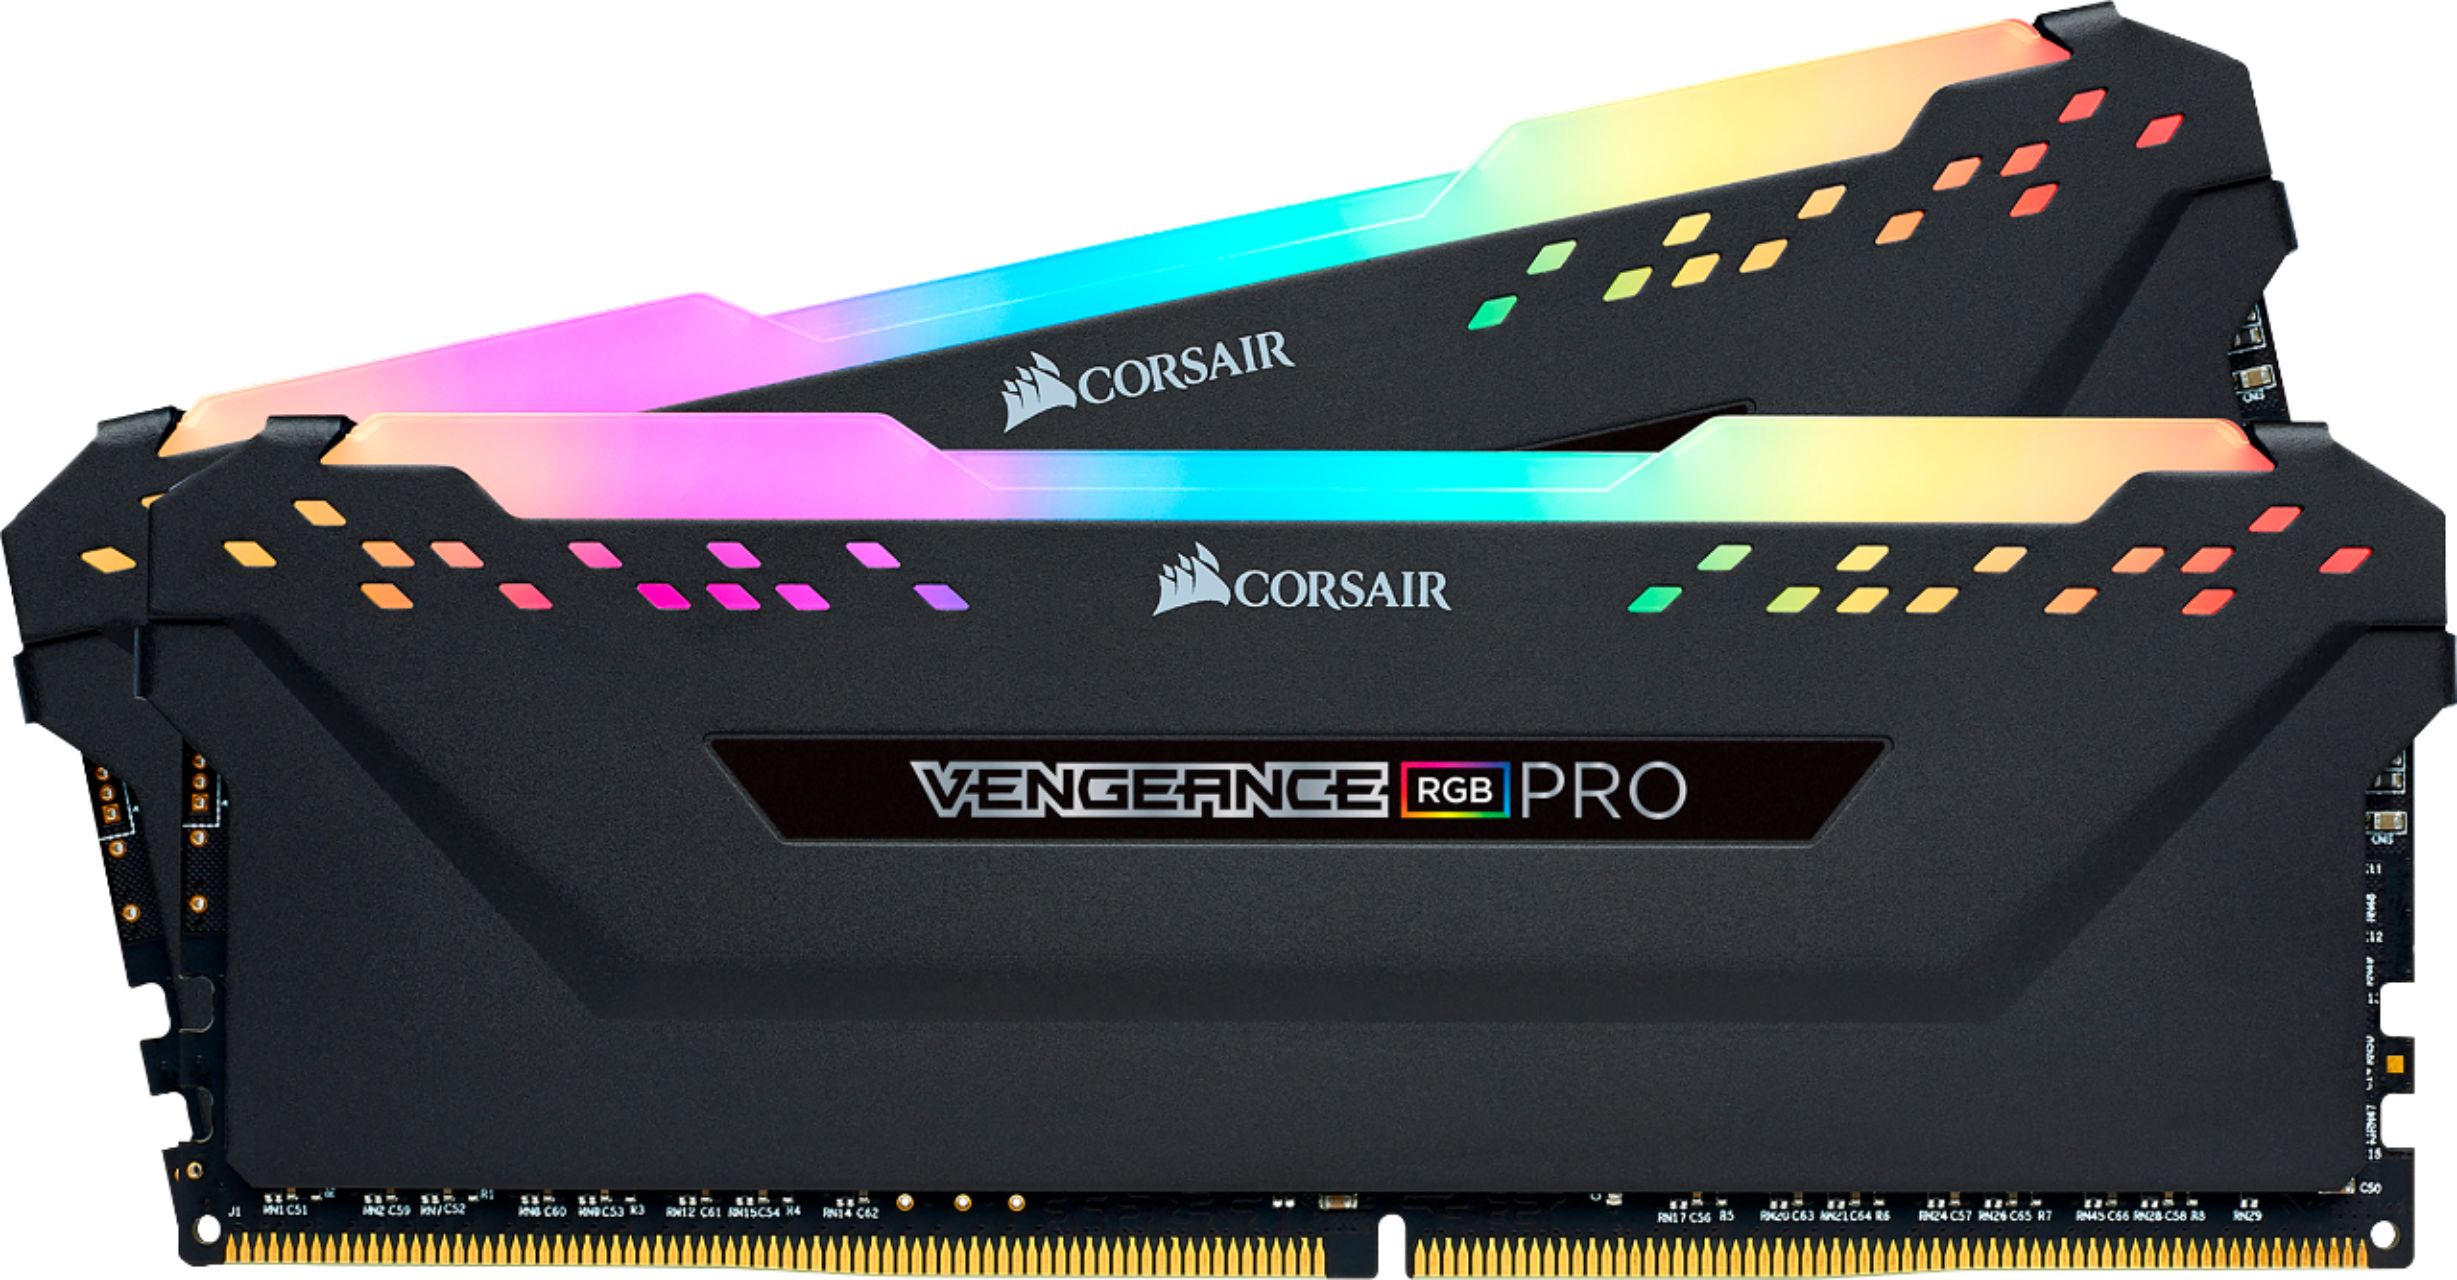 DDR4 3600 MHz C18 XMP 2.0 Enthusiast RGB LED Illuminated Memory Kit 4 x 8 GB Black Corsair Vengeance RGB PRO 32 GB